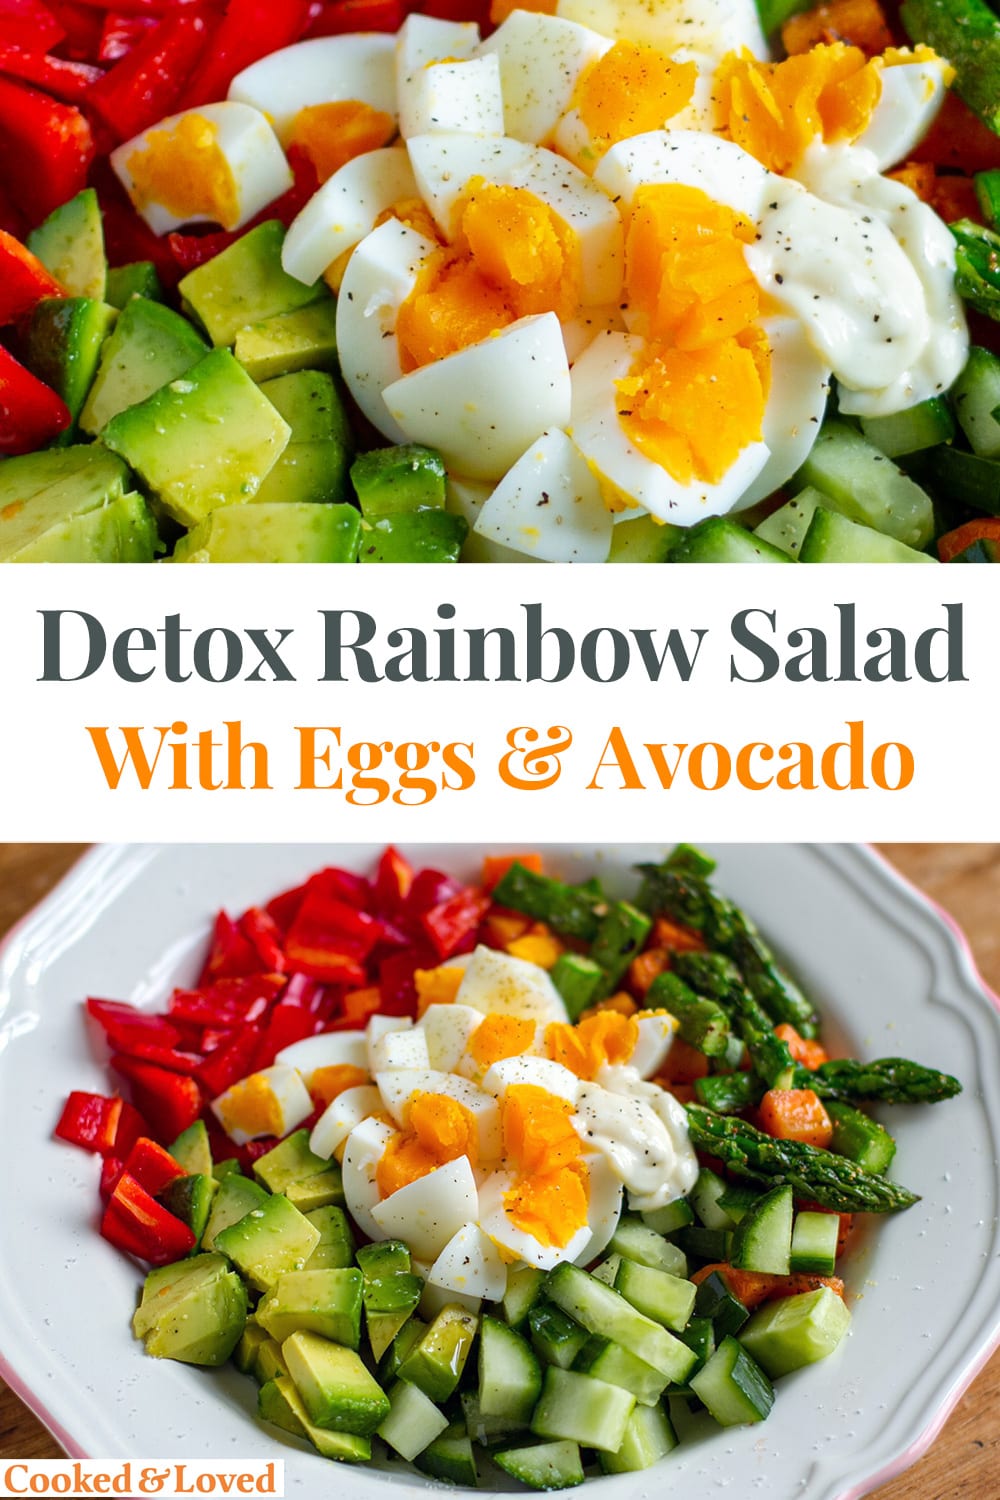 Detox Rainbow Salad With Eggs & Avocado